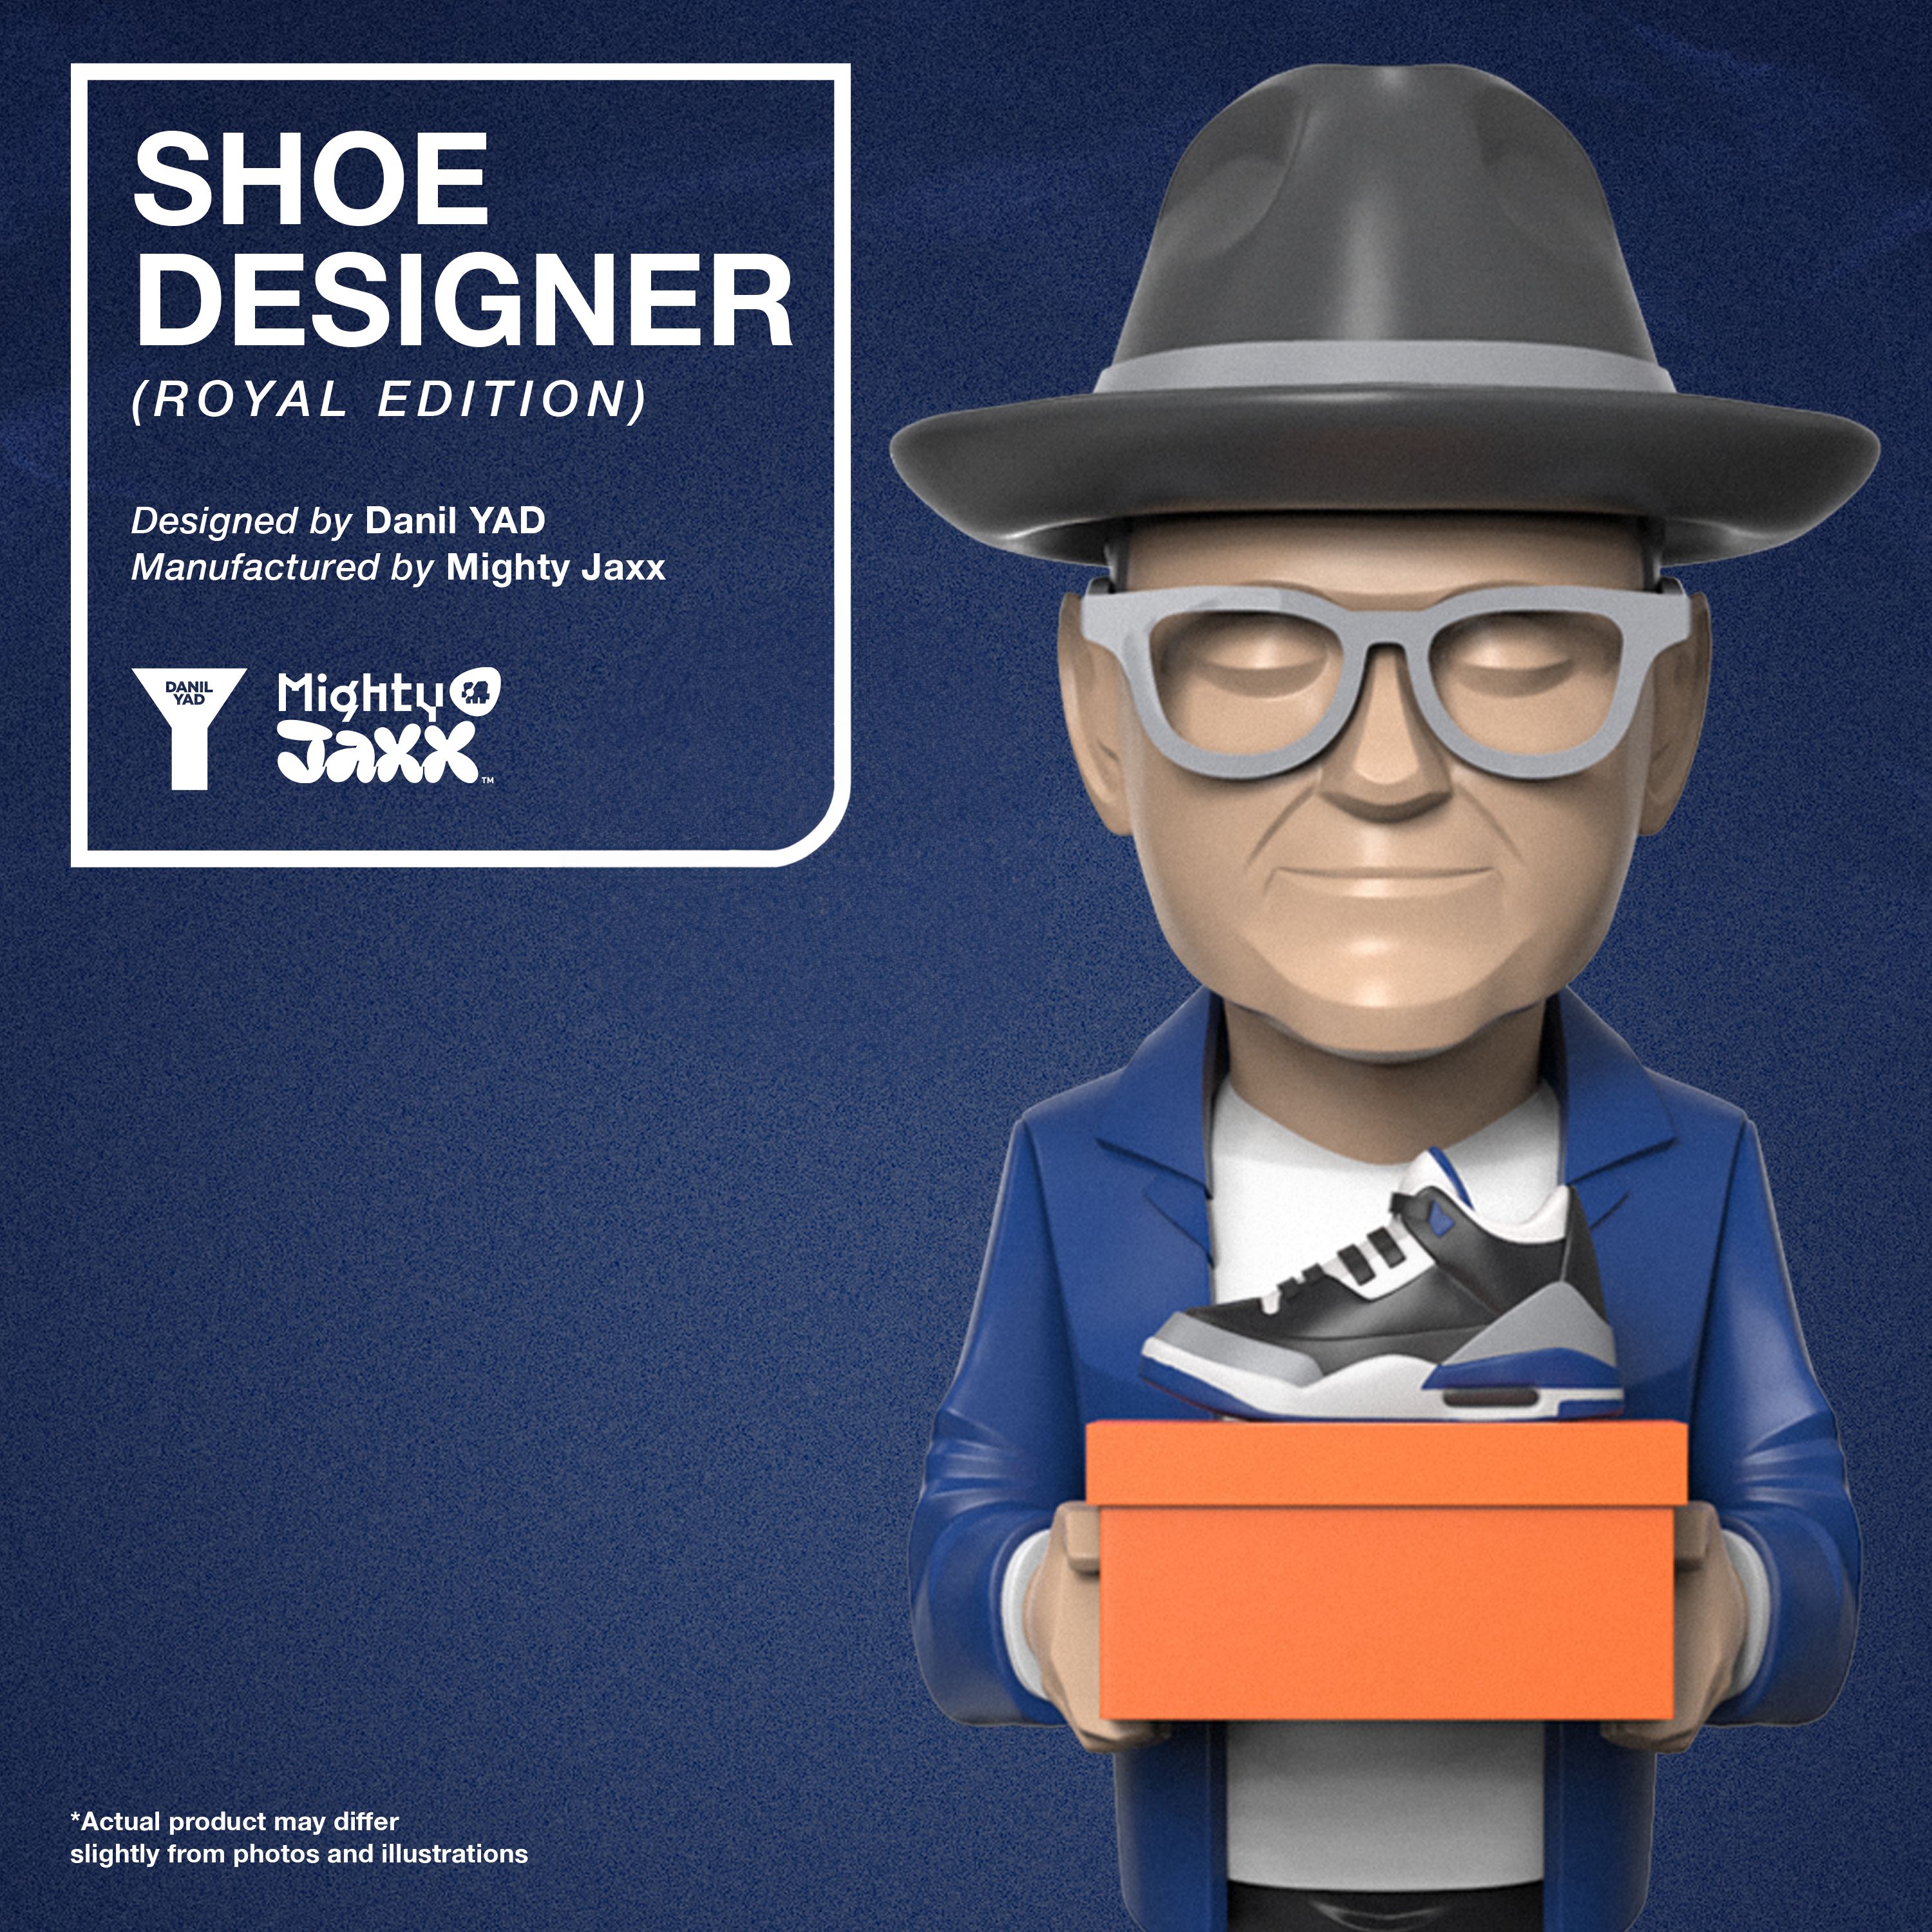 Shoe Designer (Royal Edition) by Danil Yad